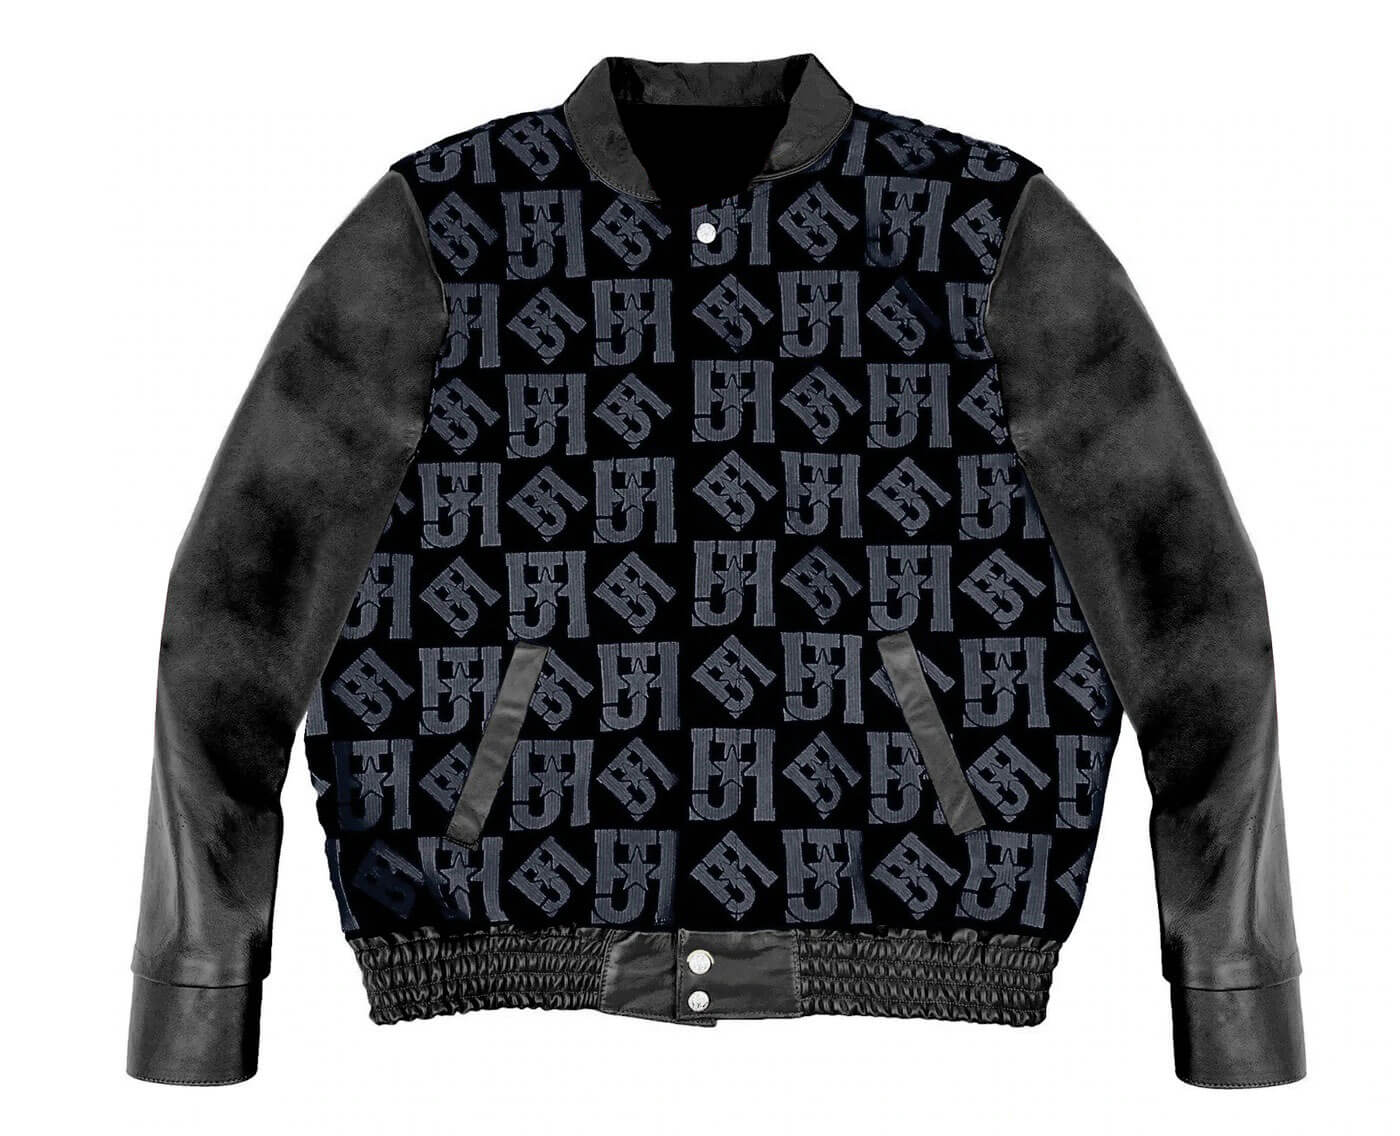 Black JH Monogram Wool And Leather Jacket - Maker of Jacket